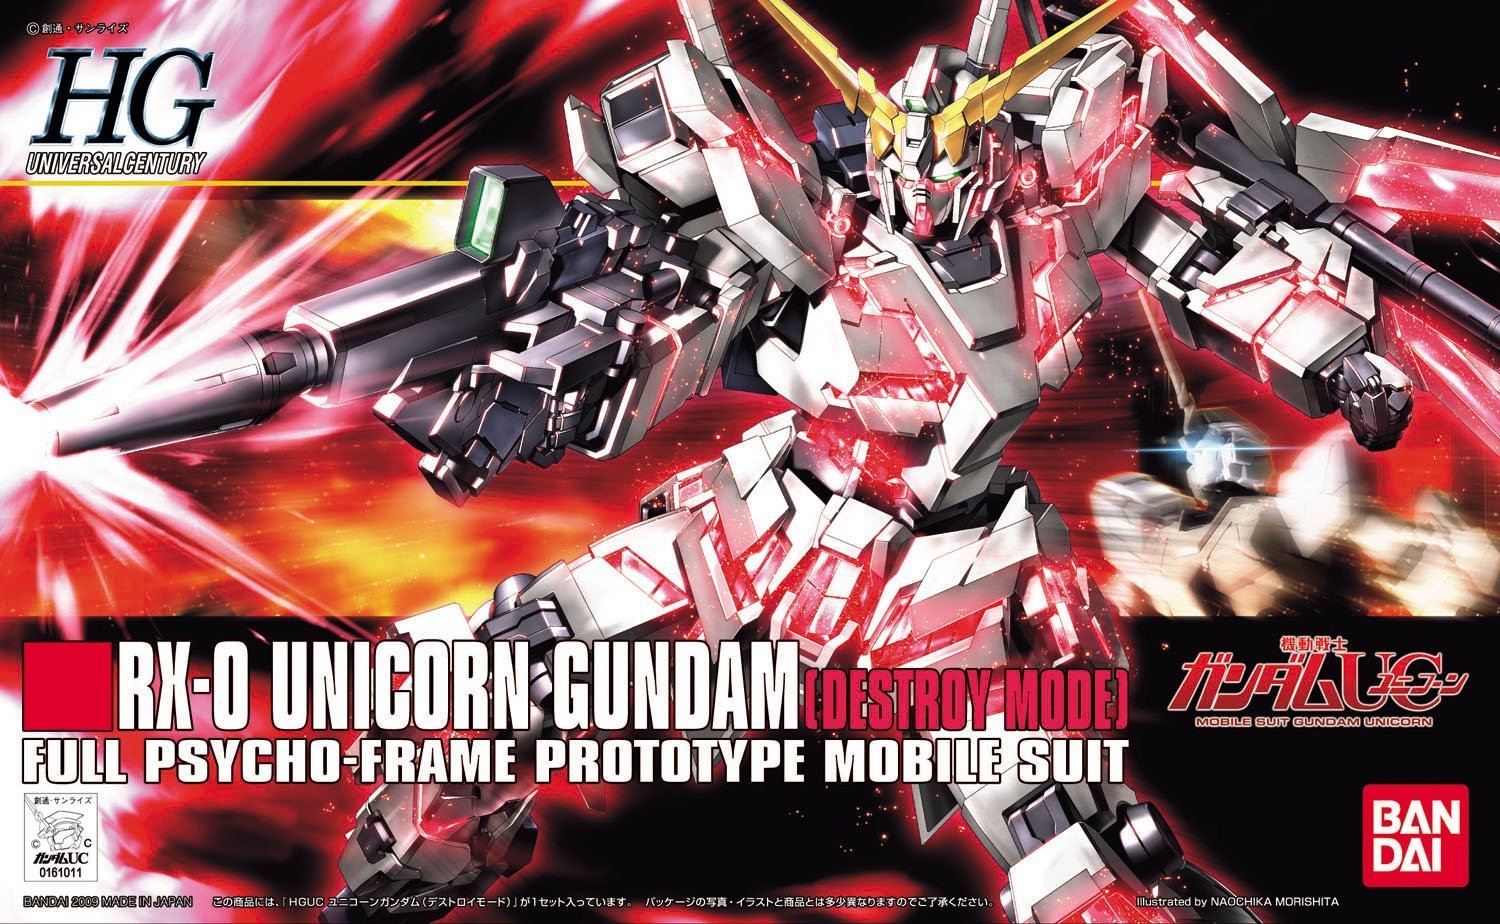 HGUC 1/144 RX-0 ユニコーンガンダム（デストロイモード） [Unicorn Gundam (Destroy Mode)] 0161011 5057399 4573102573995 4543112610119